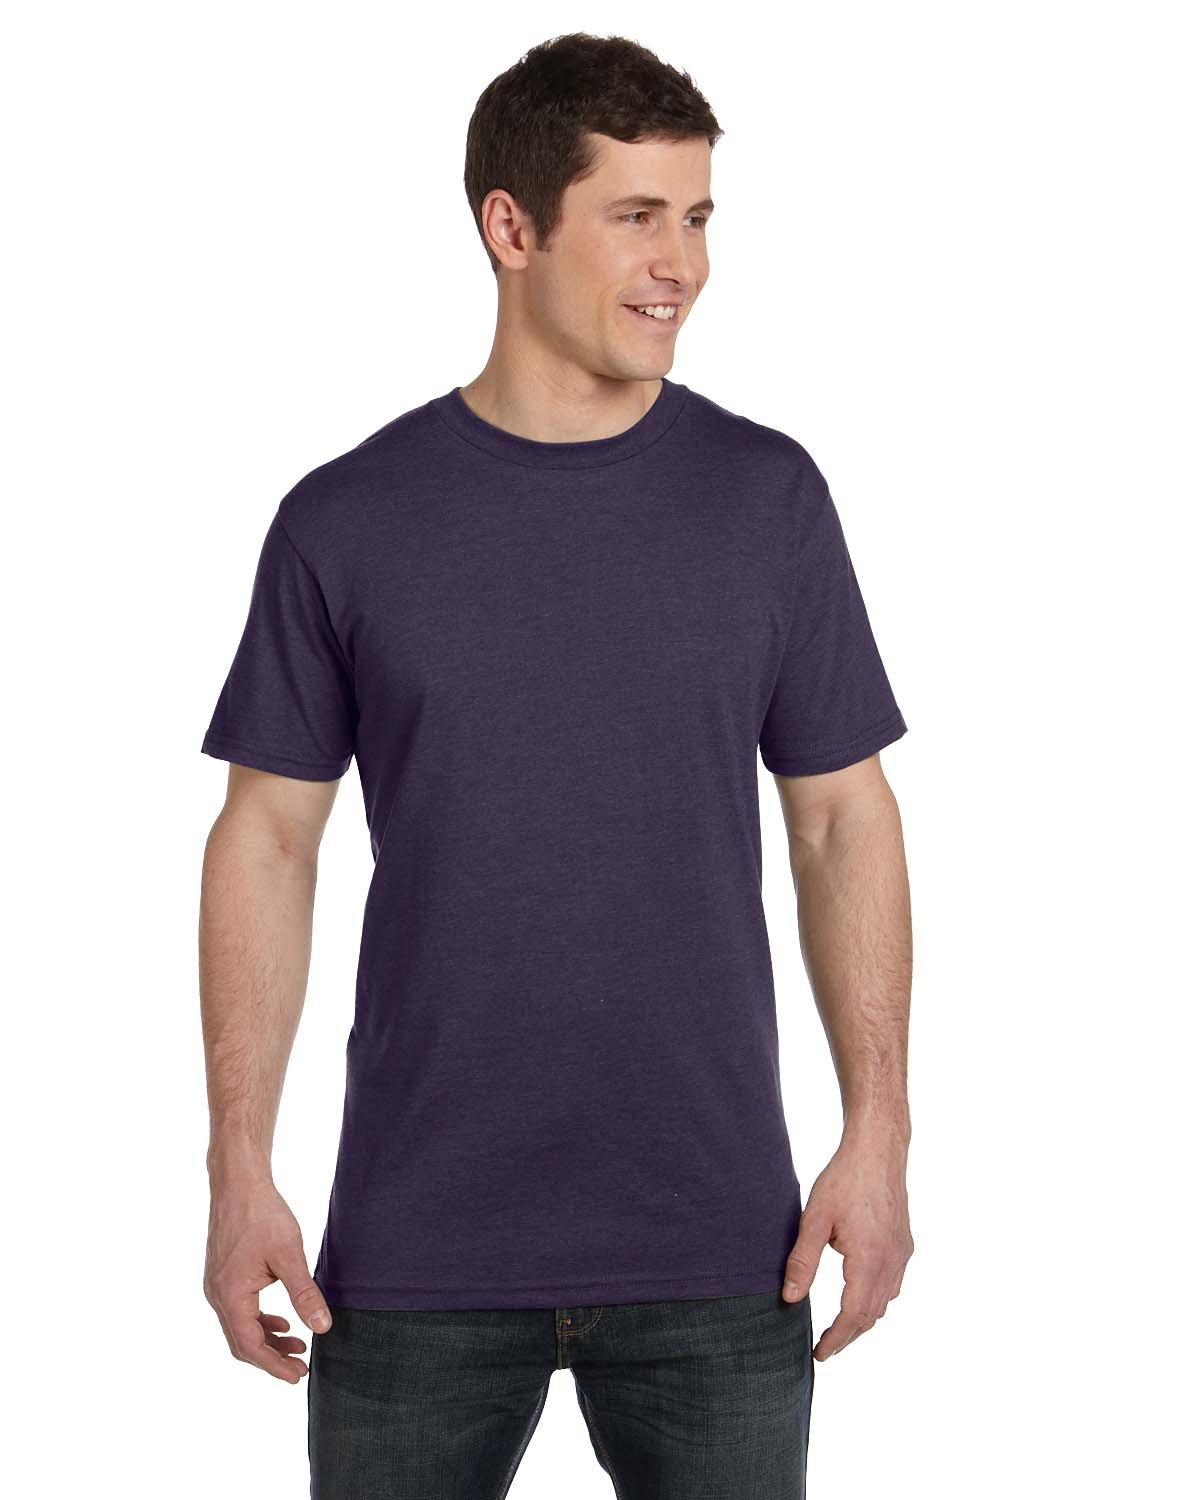 econscious Men's Blended Eco T-Shirt EGGPLANT 